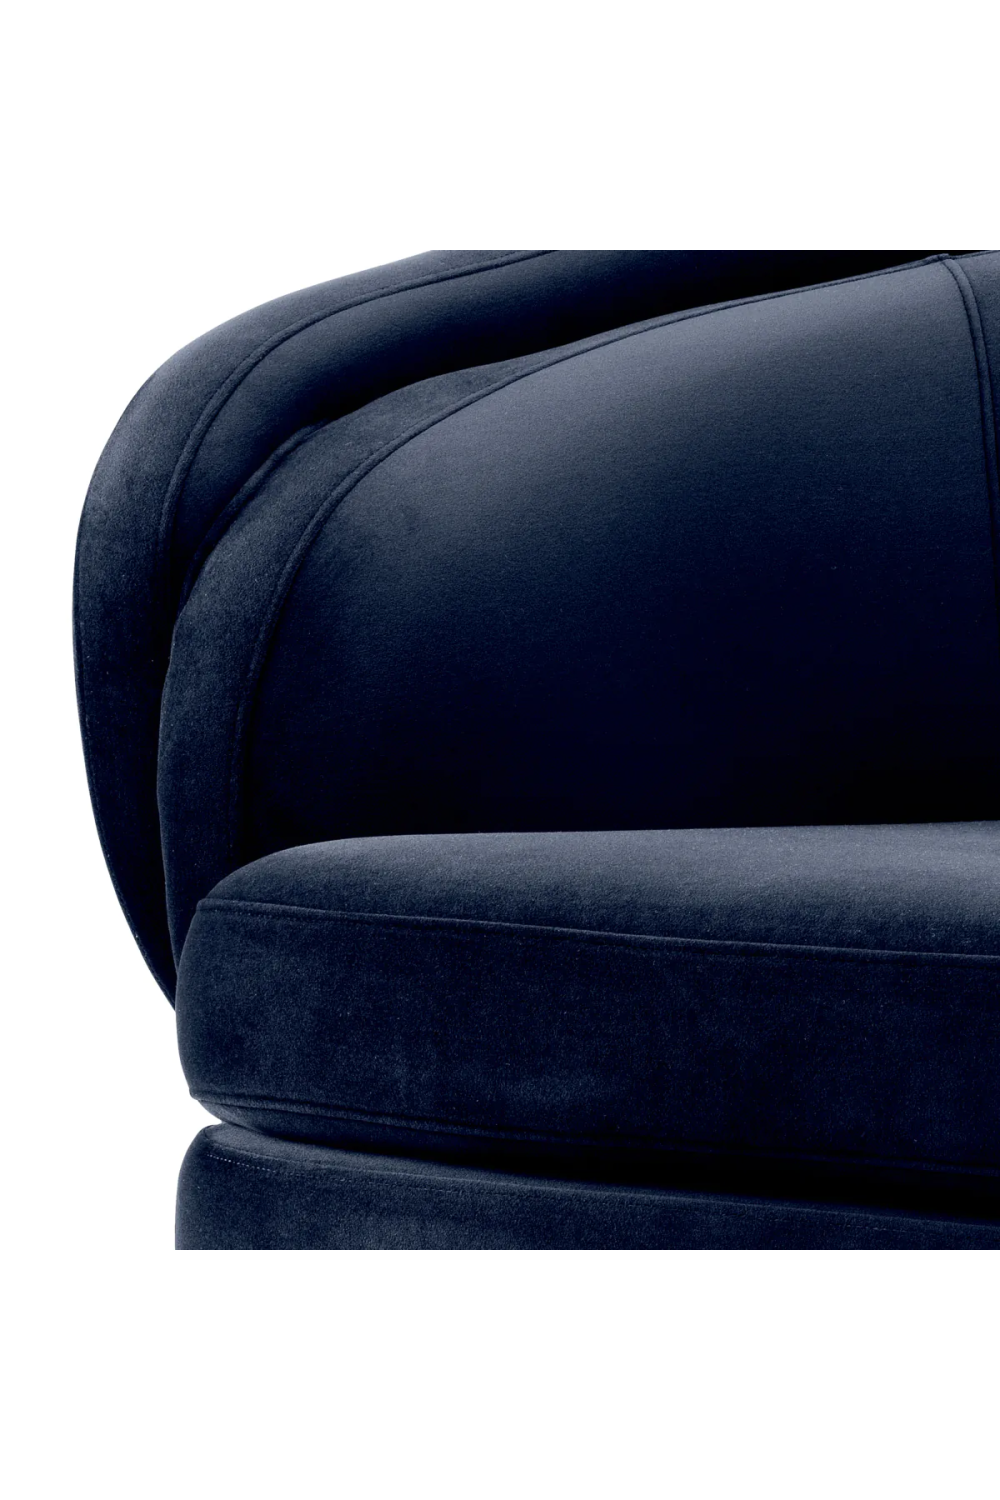 Blue Velvet Retro Lounge Chair | Eichholtz Orion | Oroa.com